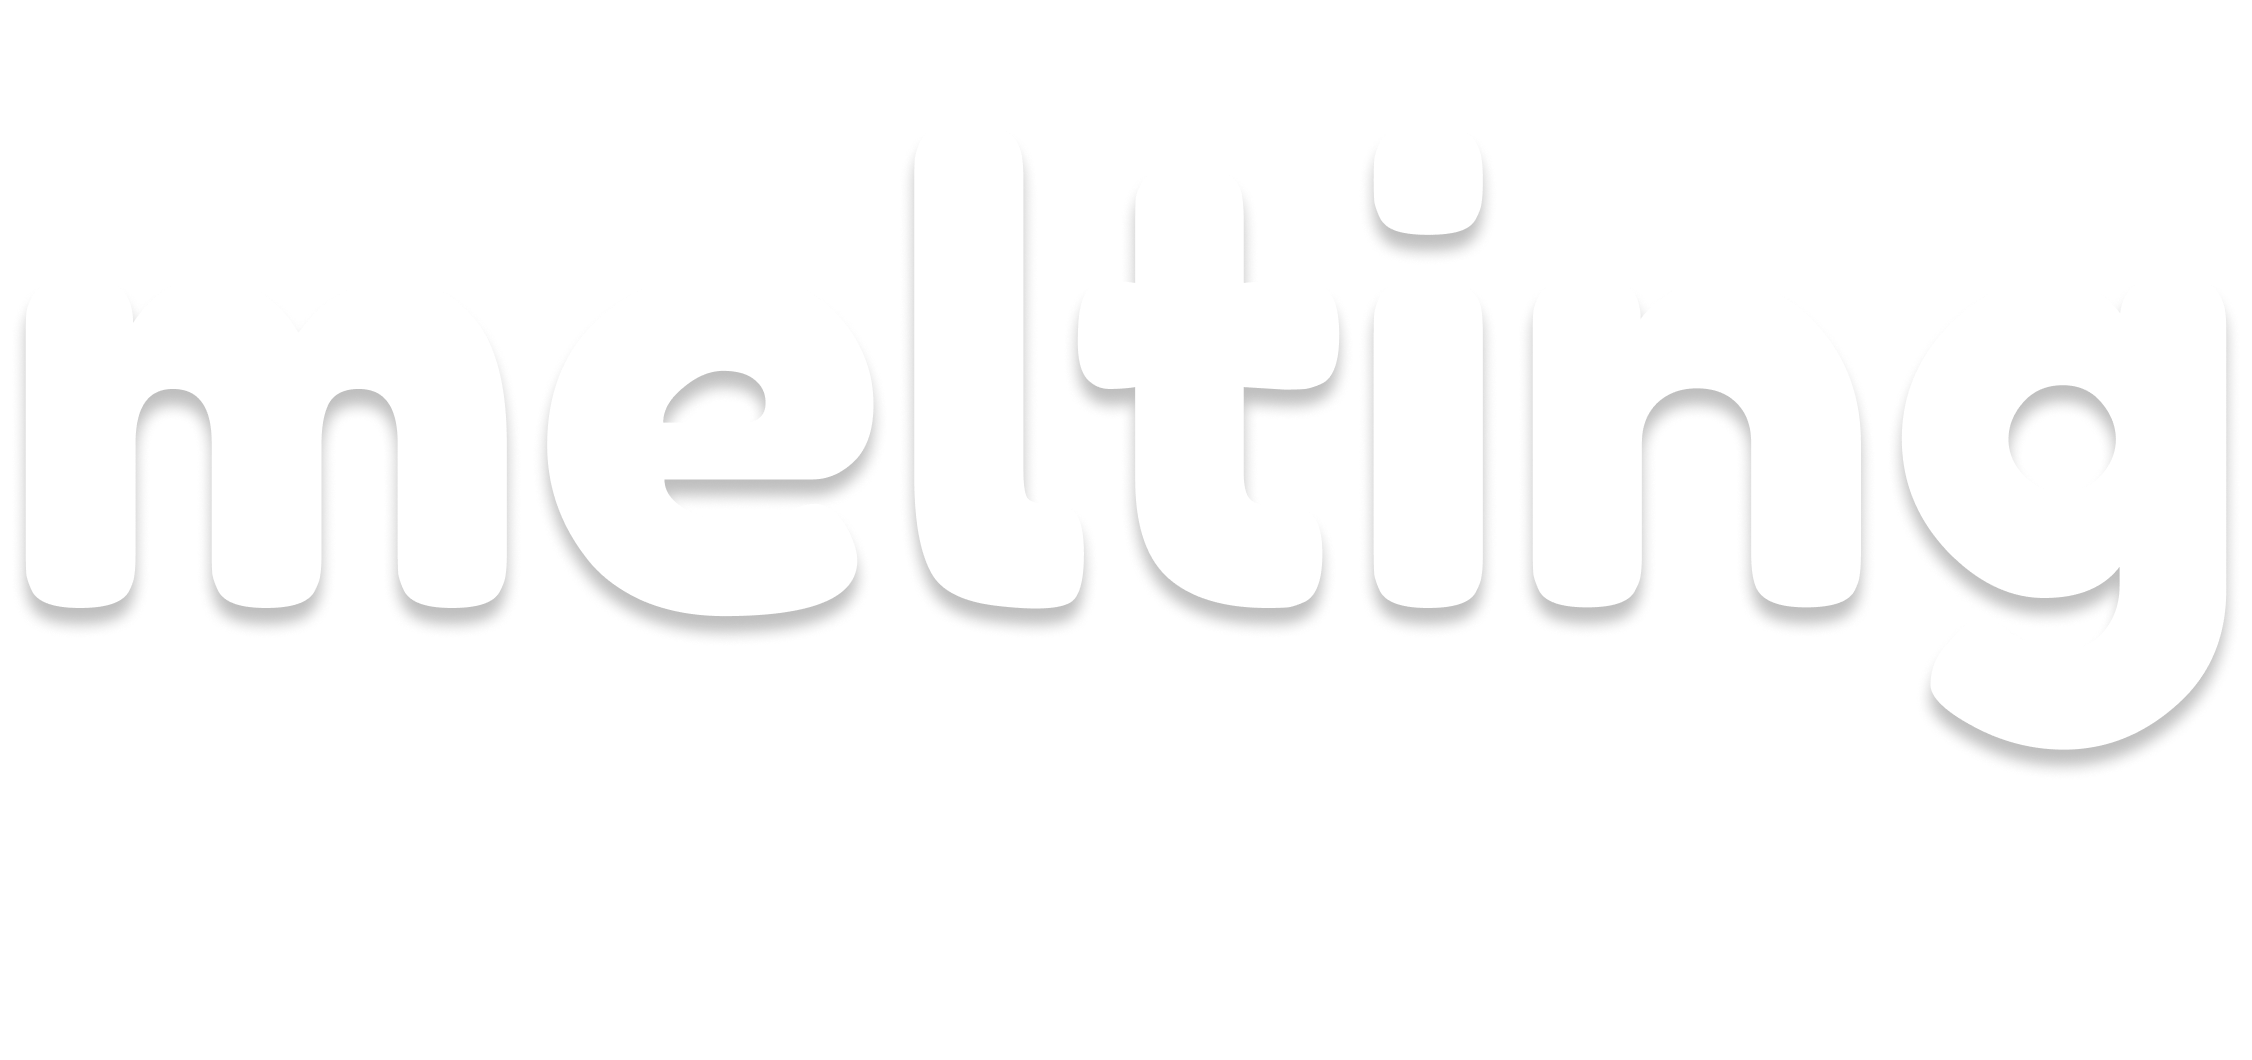 The logo of melting web site